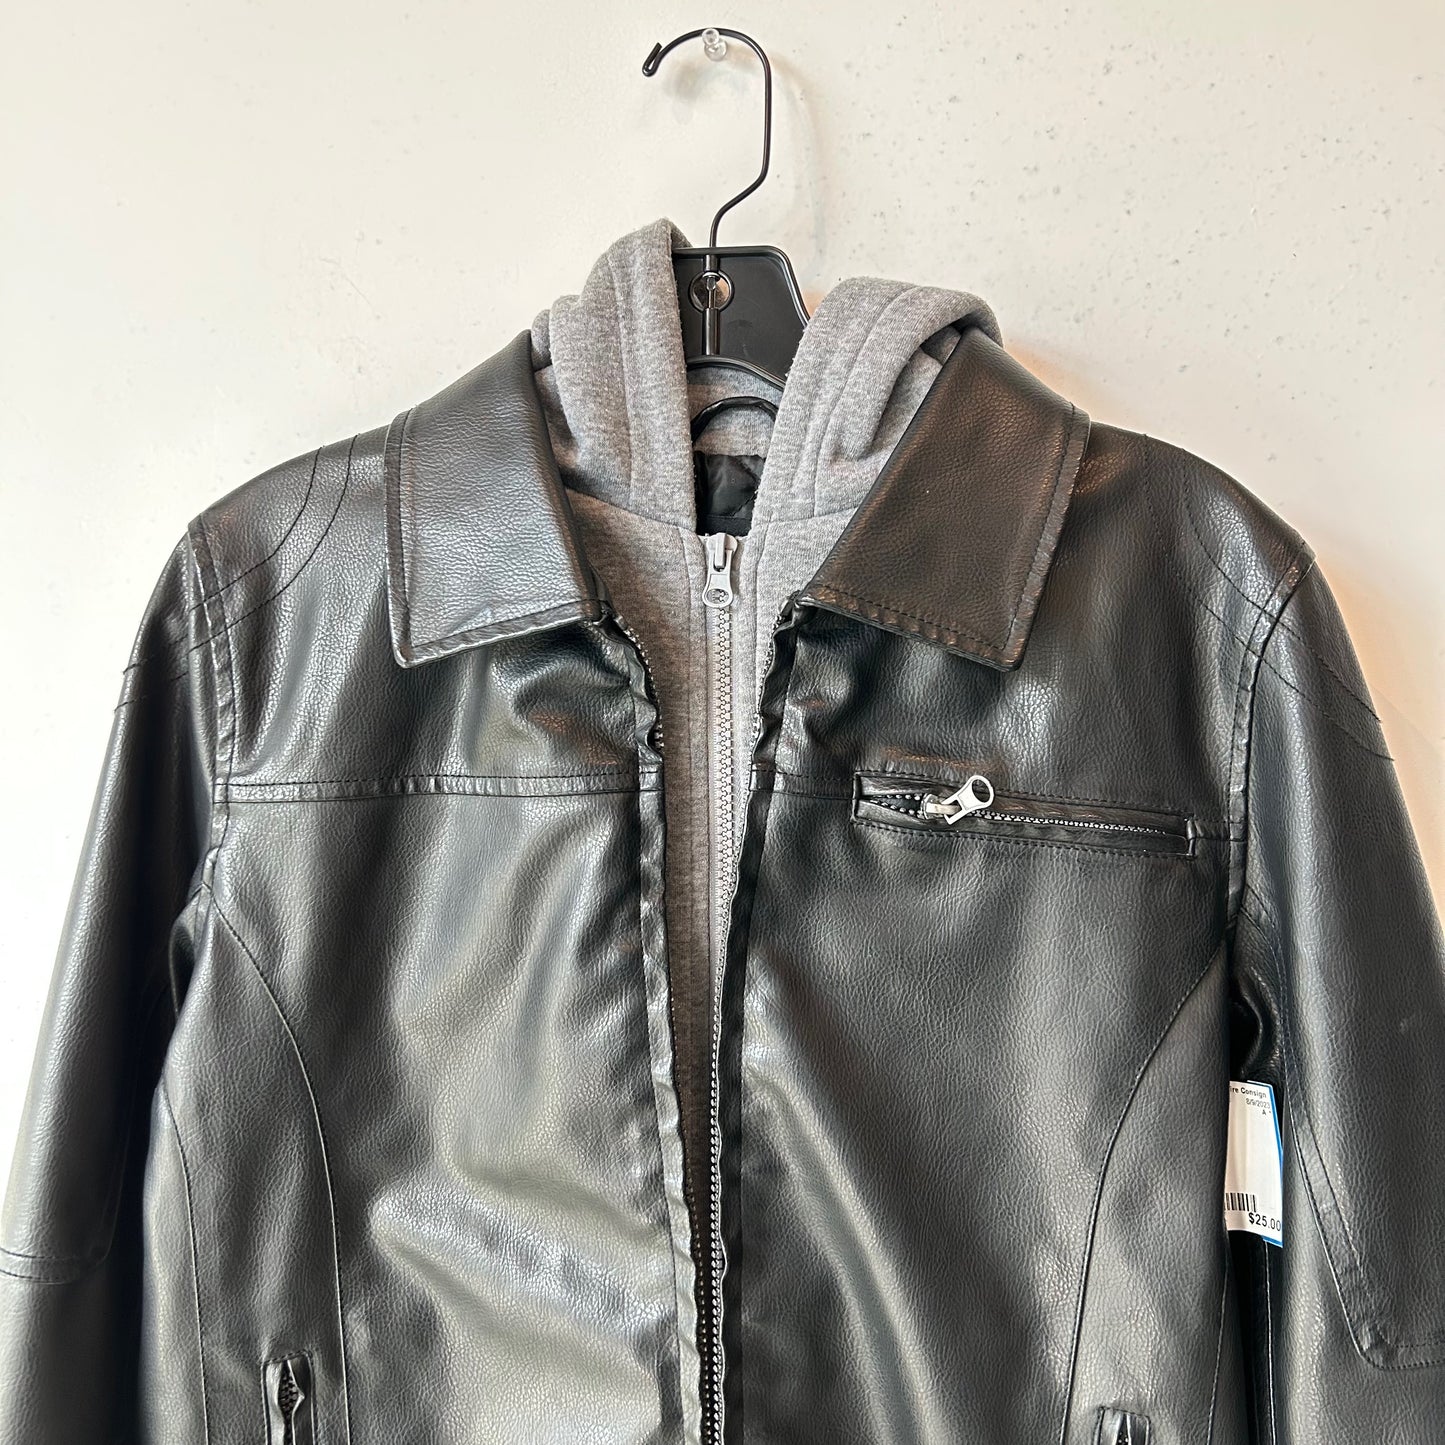 S Black Leather North Zone Jacket